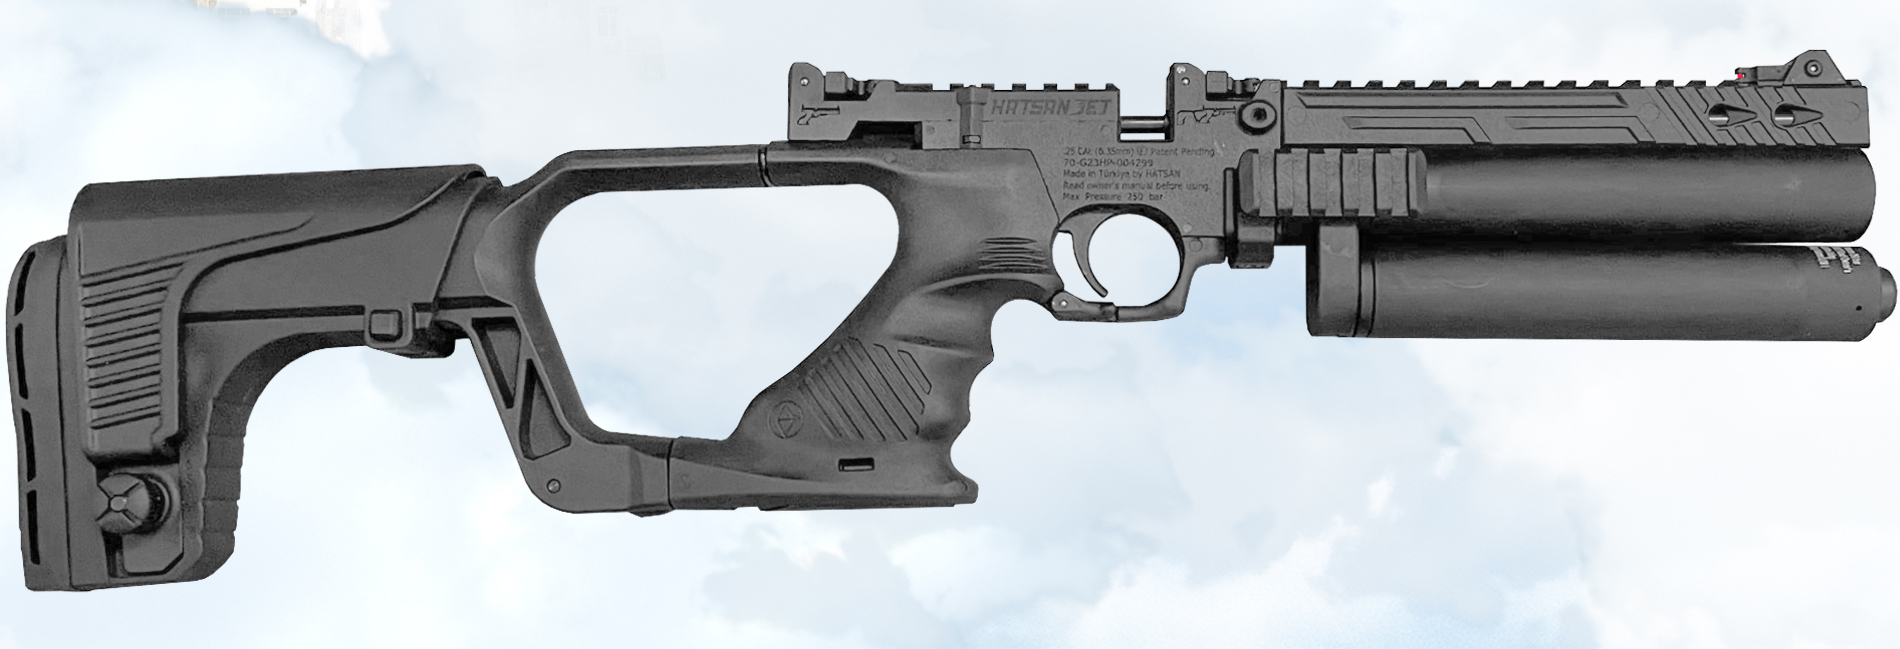 PCP пистолет Hatsan Jet 2 - новинка в 5.5 и 6.35 мм